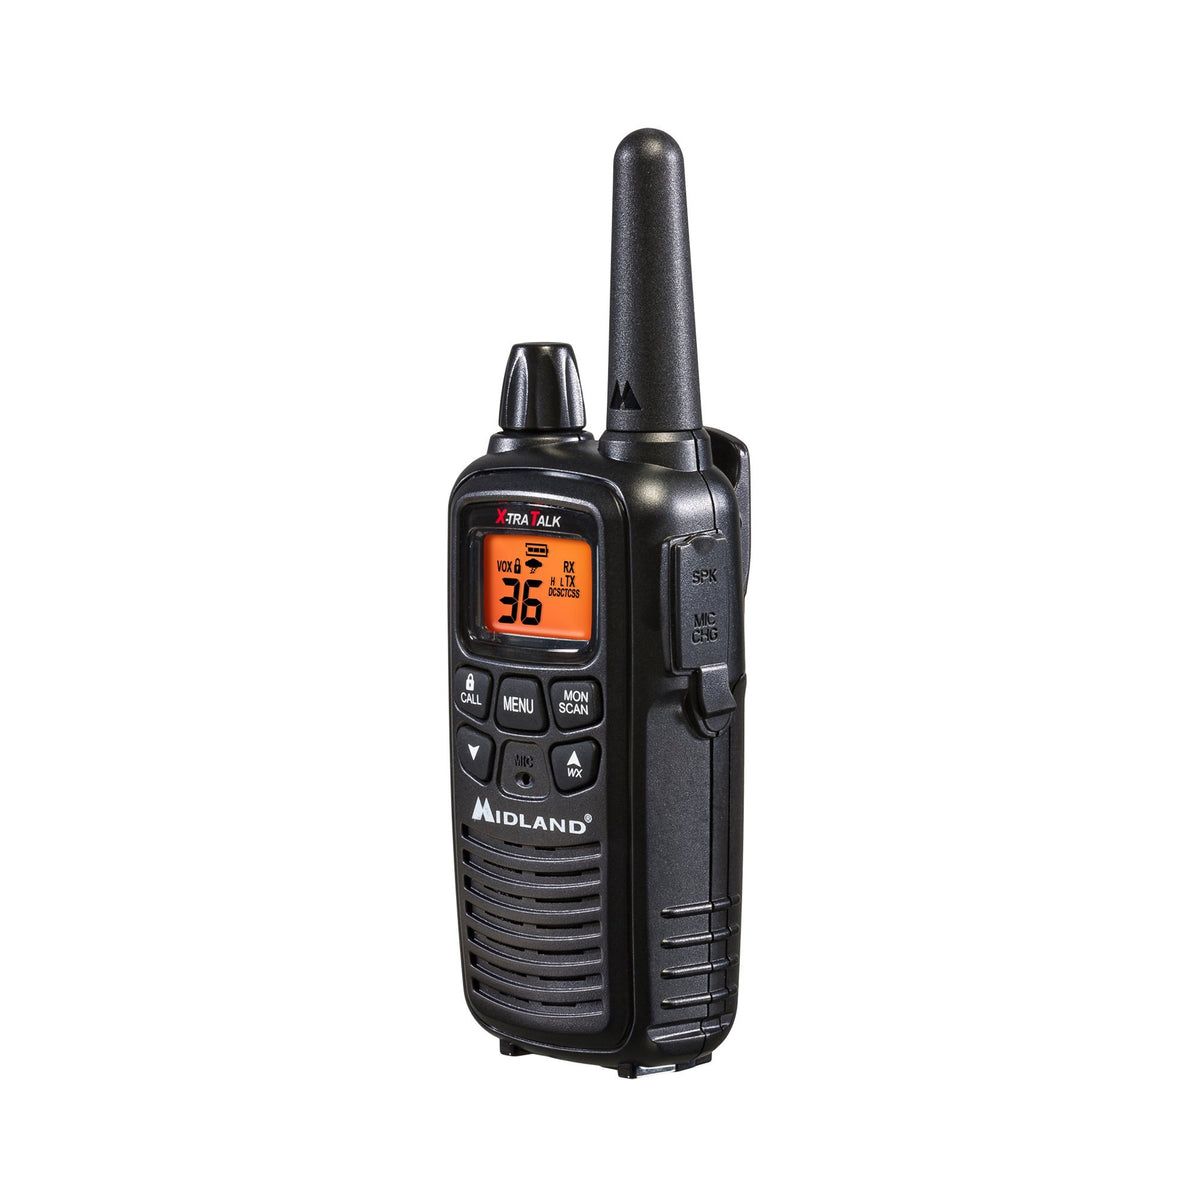 Pack de 2 Midland G11 Pro - Talkie walkie - C966.06